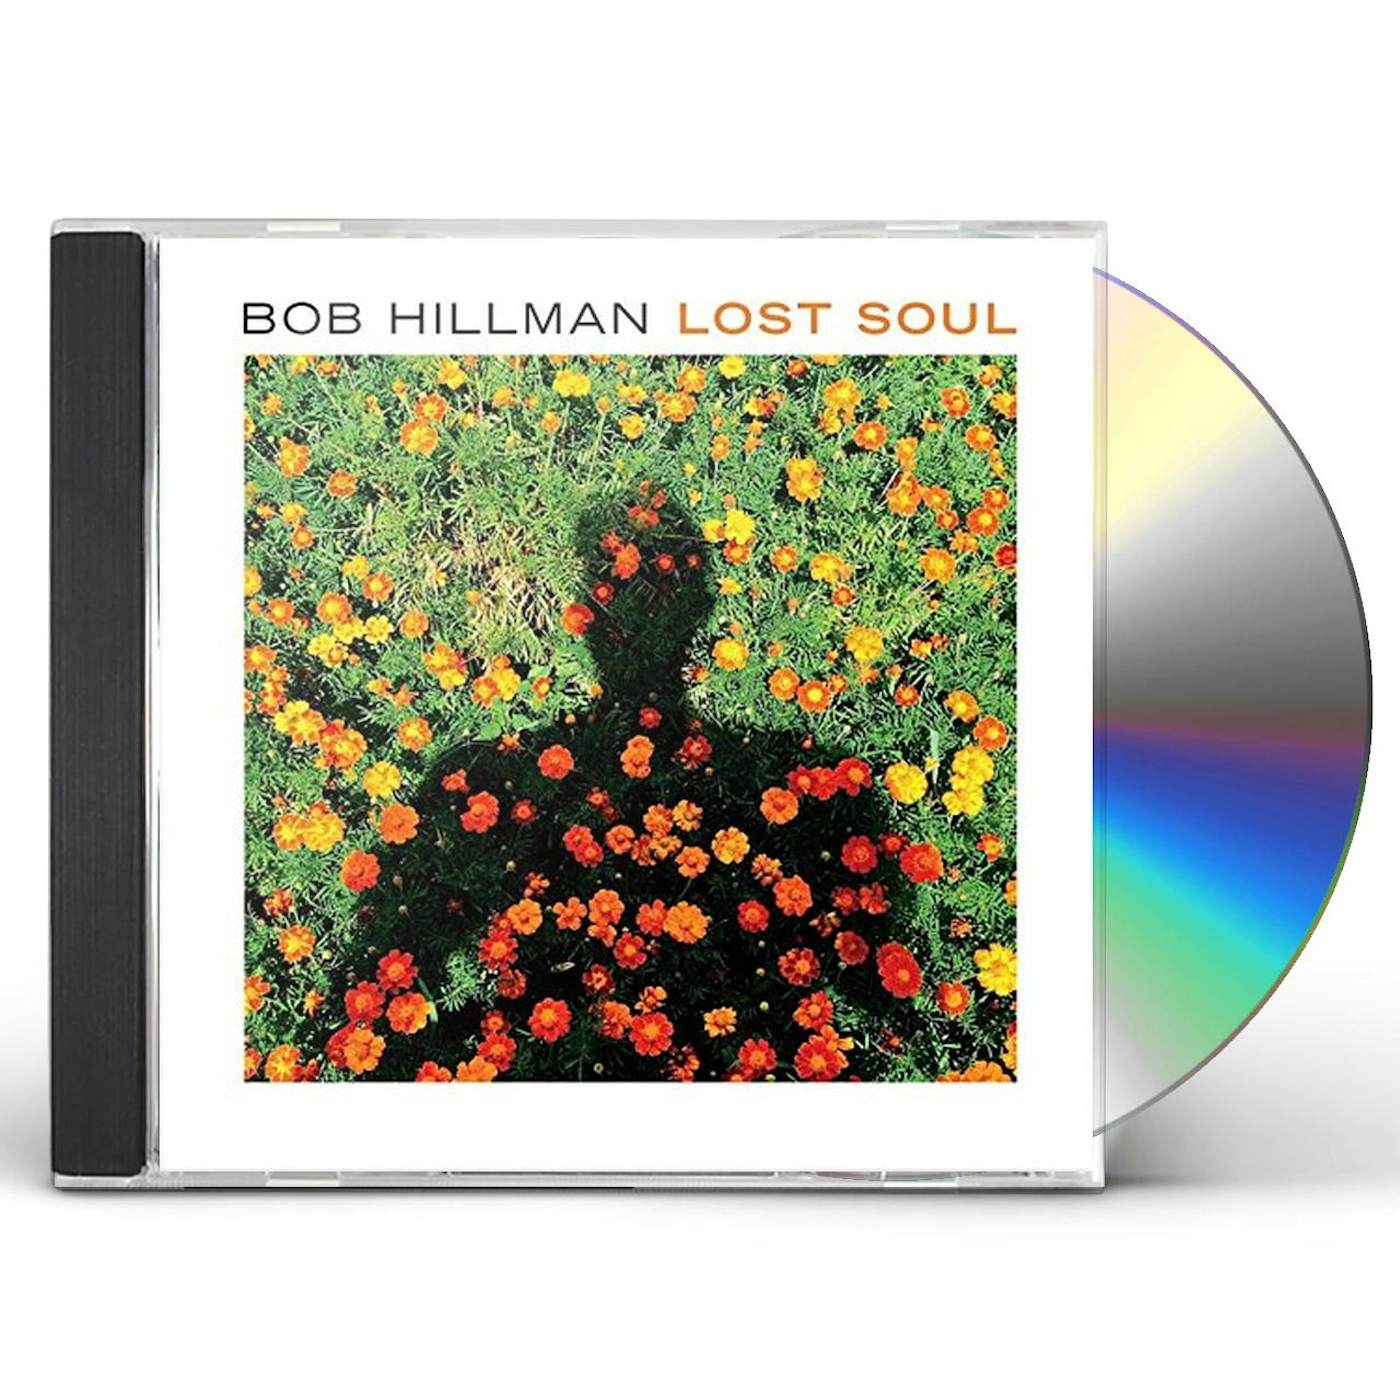 Bob Hillman LOST SOUL CD